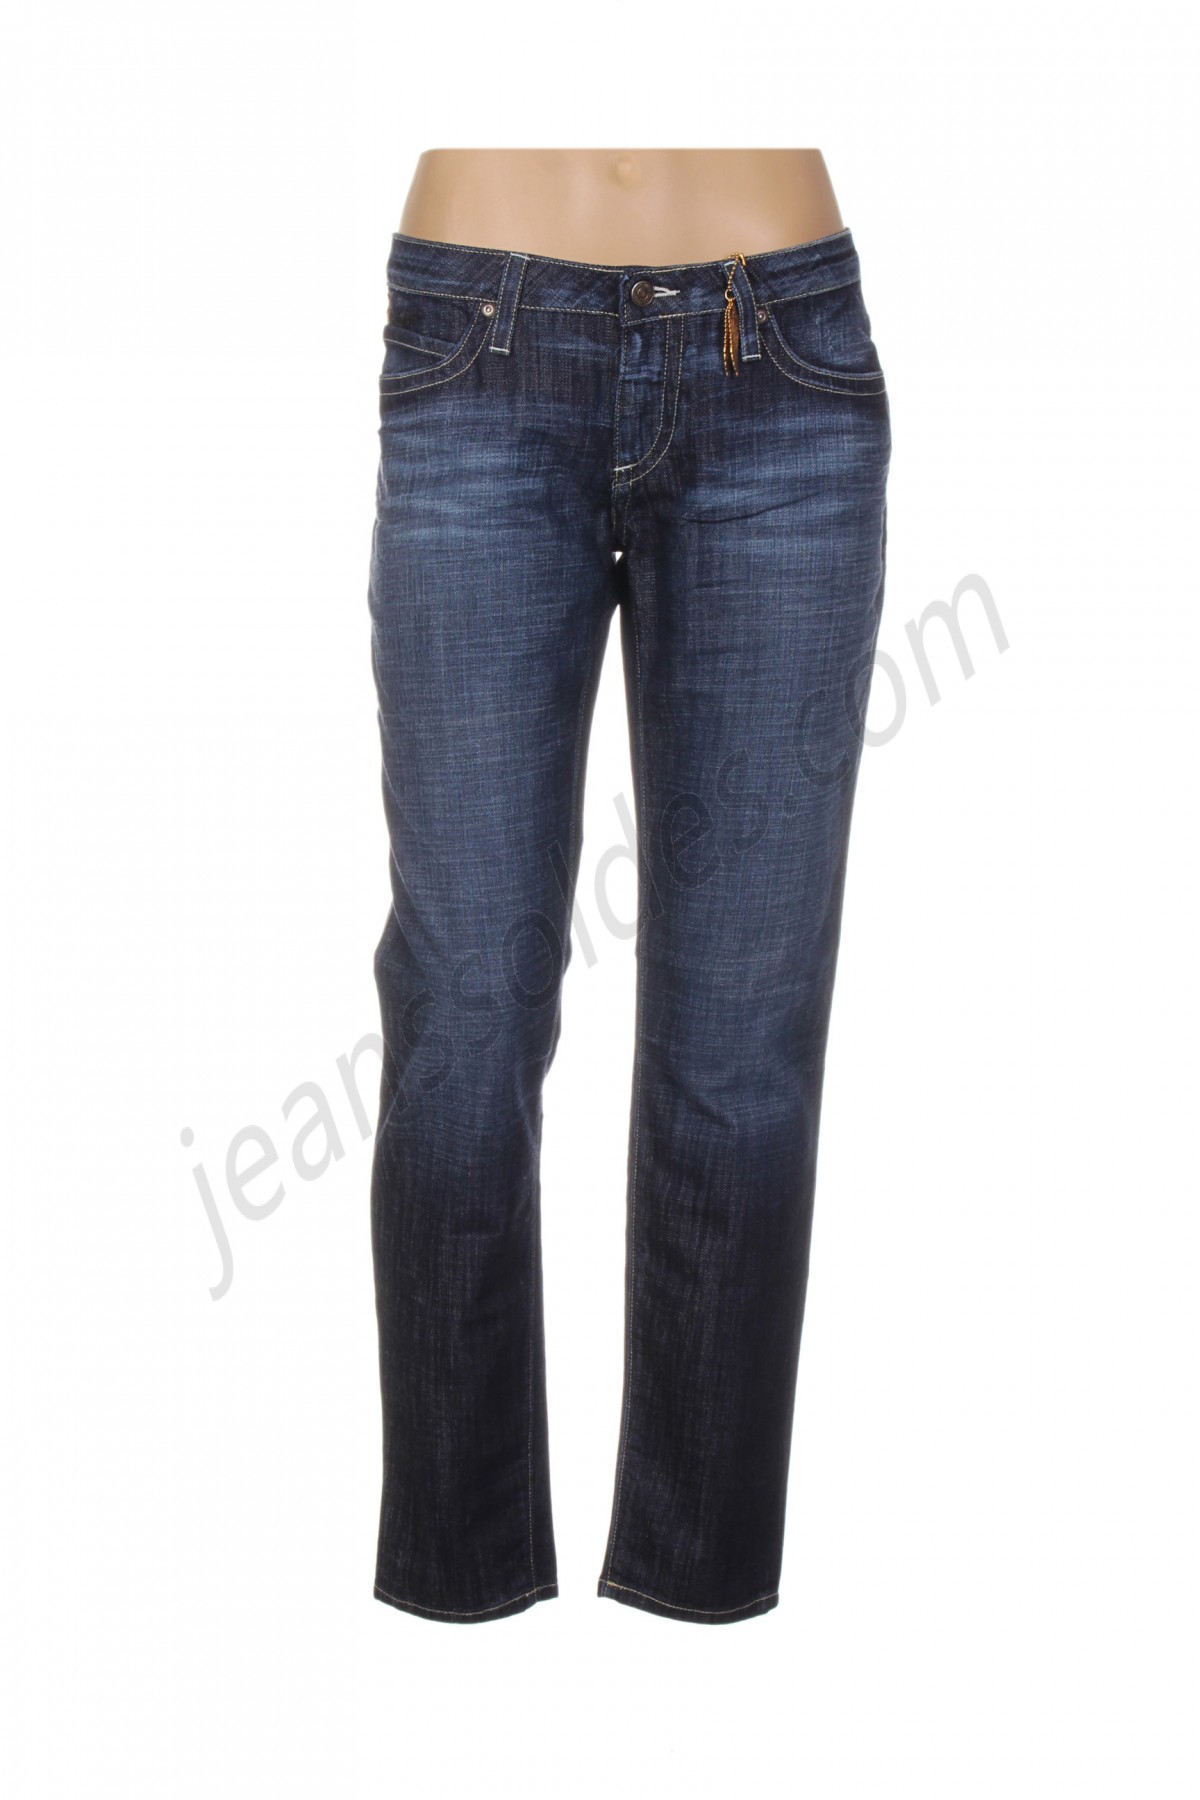 robin's jean-Jeans coupe slim prix d’amis - -0